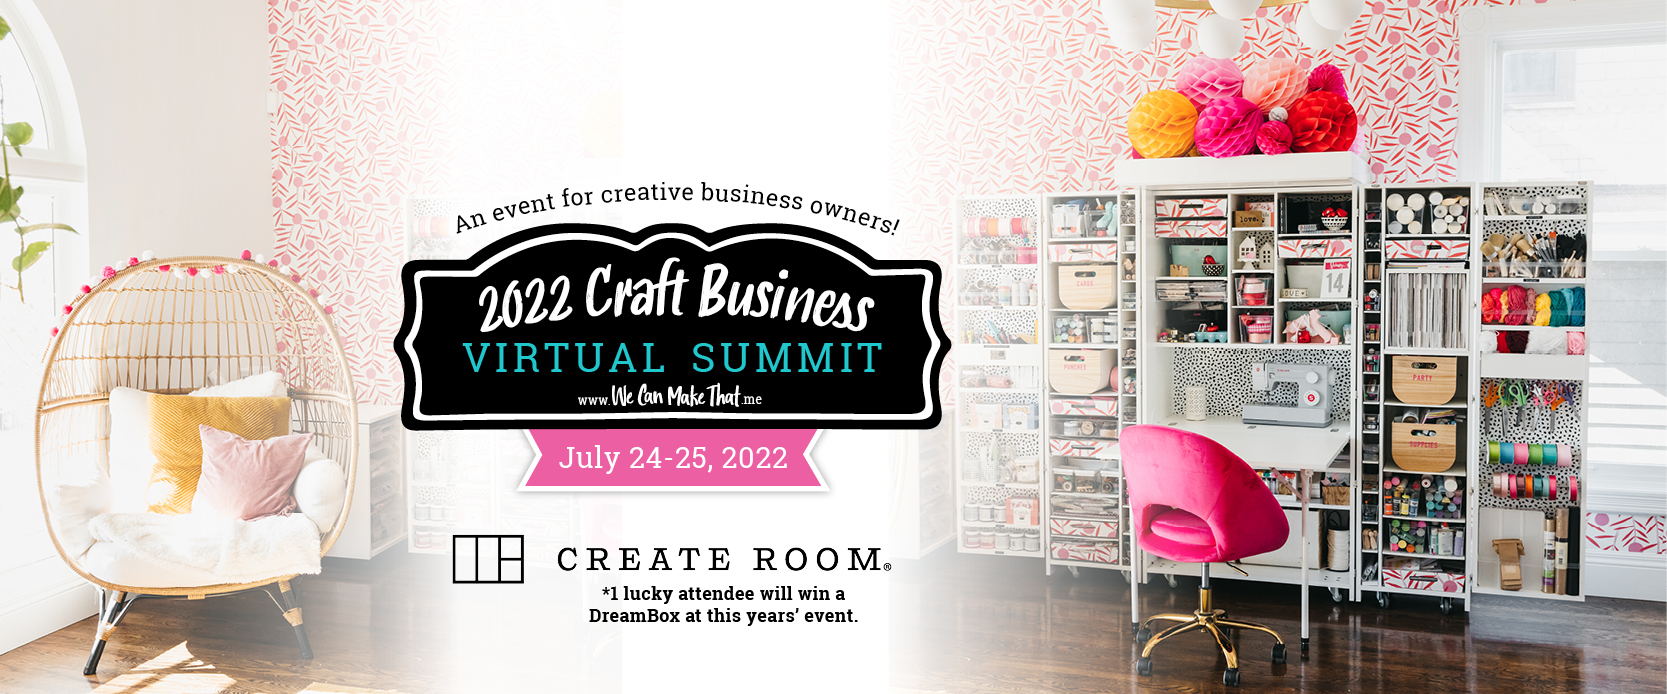 craft business summit